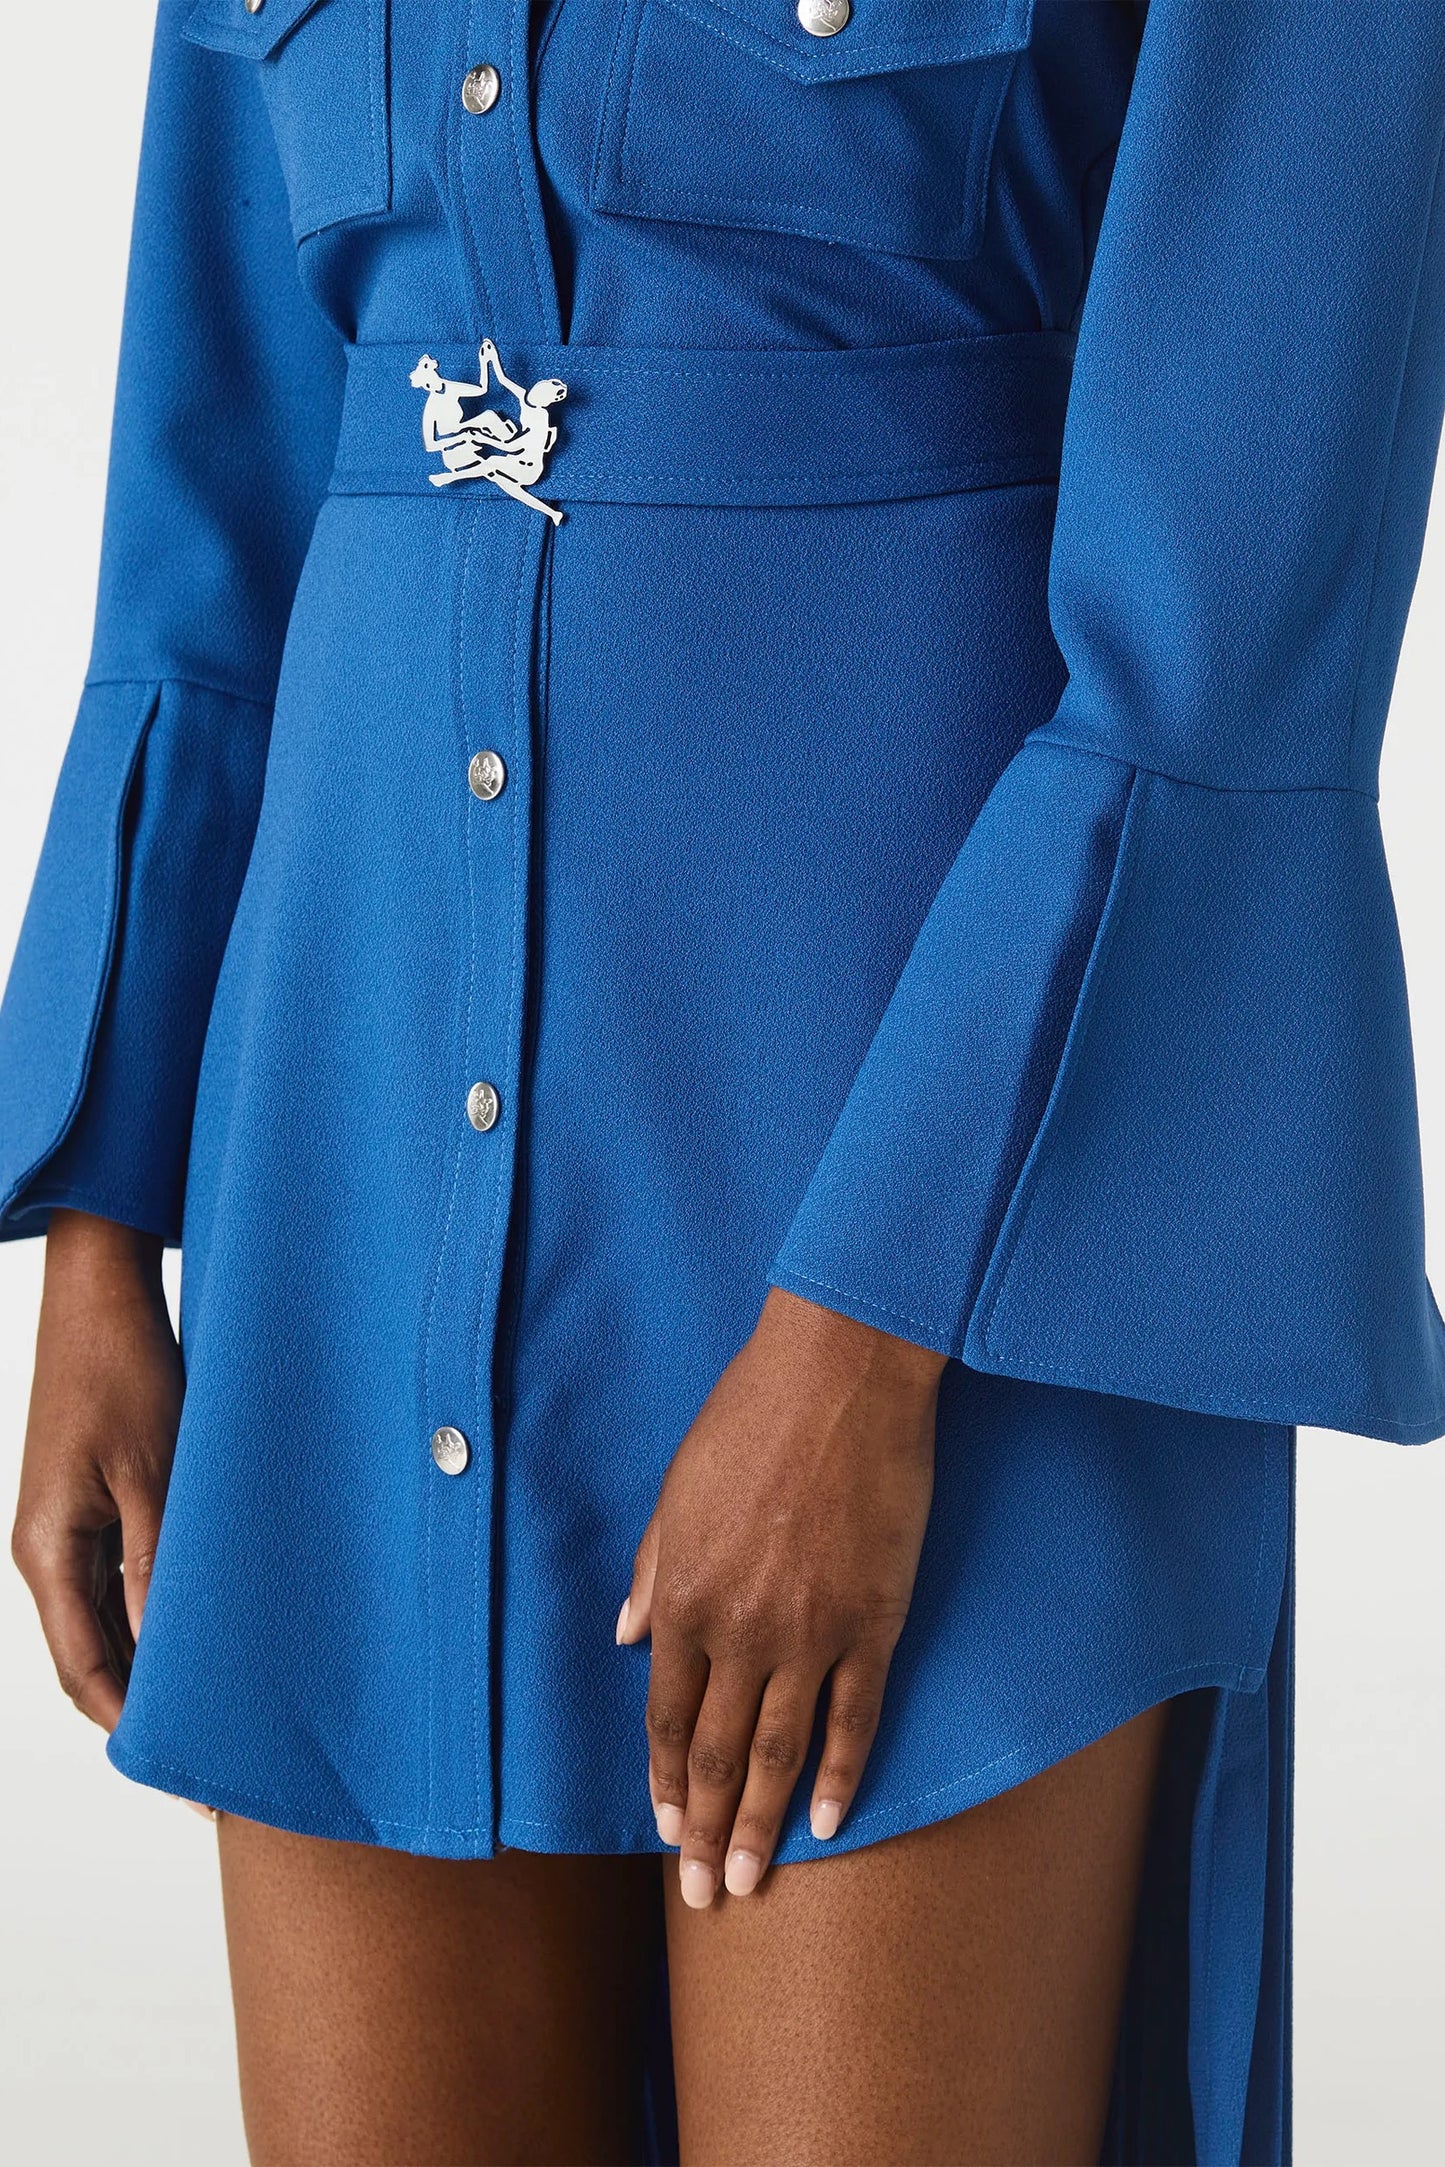 Thebe Magugu- Raglan Semi Pleated Dress: Cobalt Blue